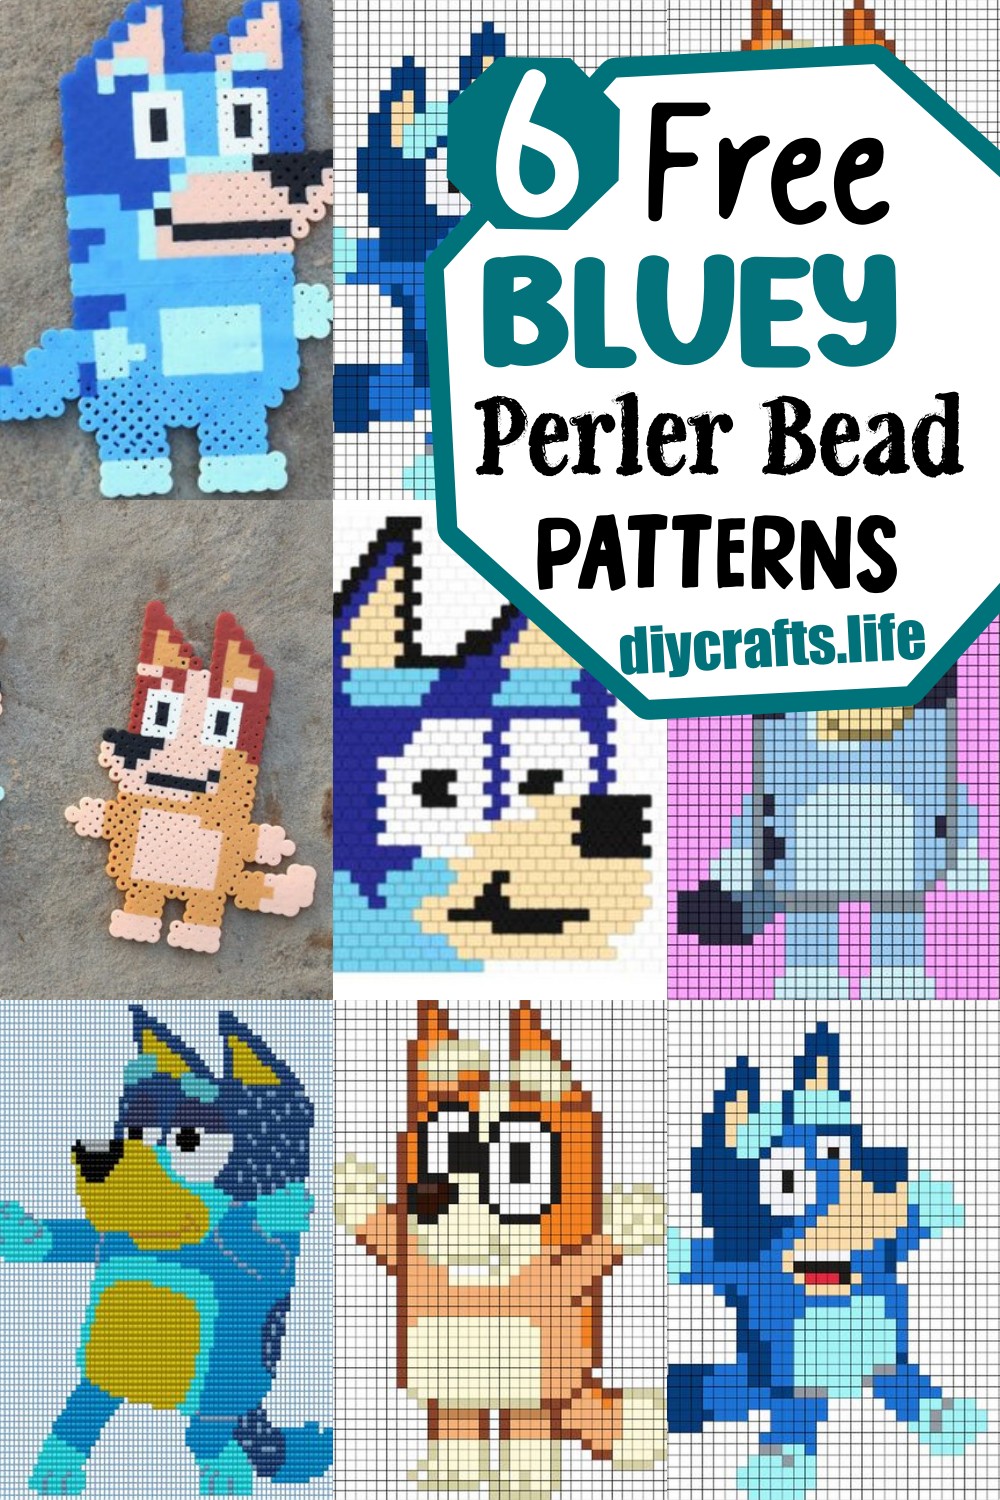 Bluey Perler Beads Patterns